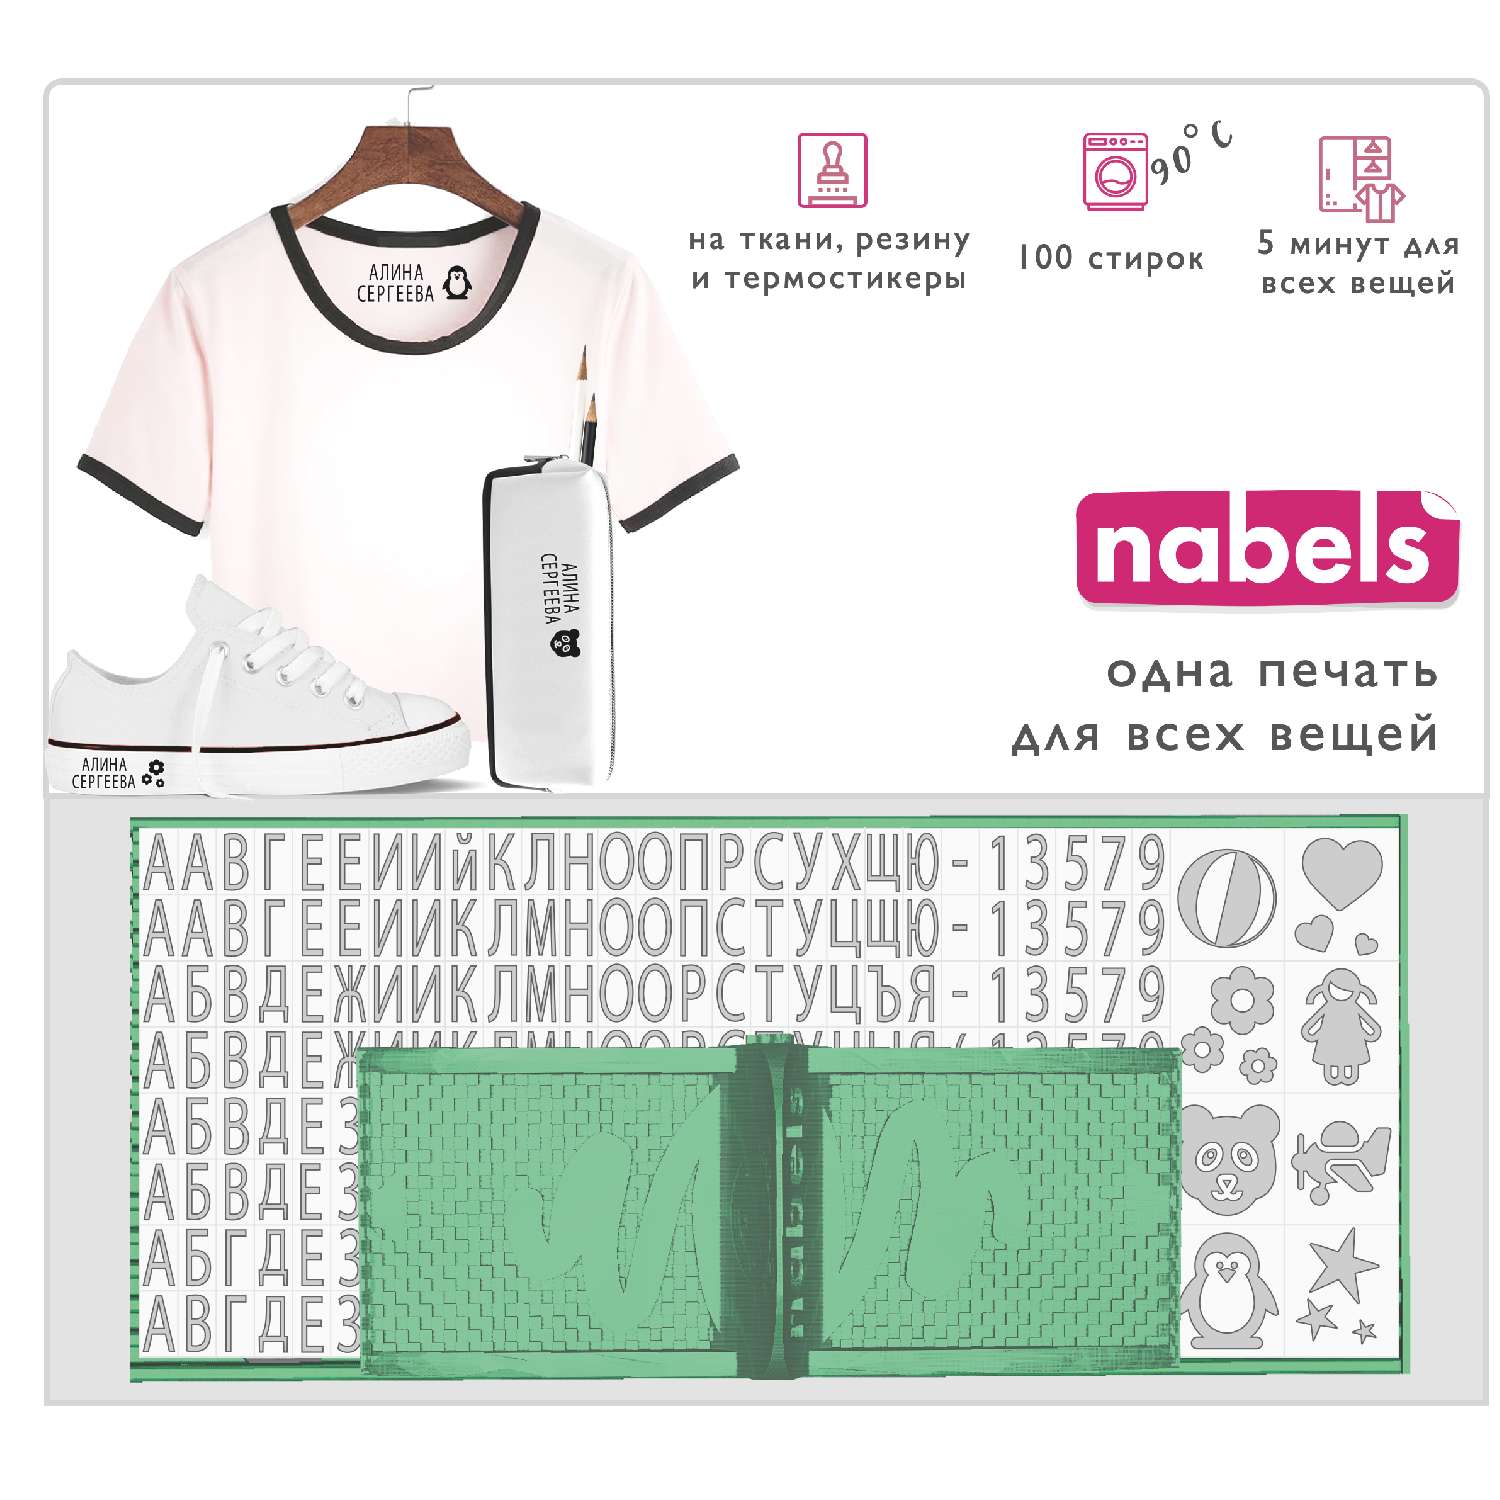 Набор Nabels для самонаборной печати - фото 1